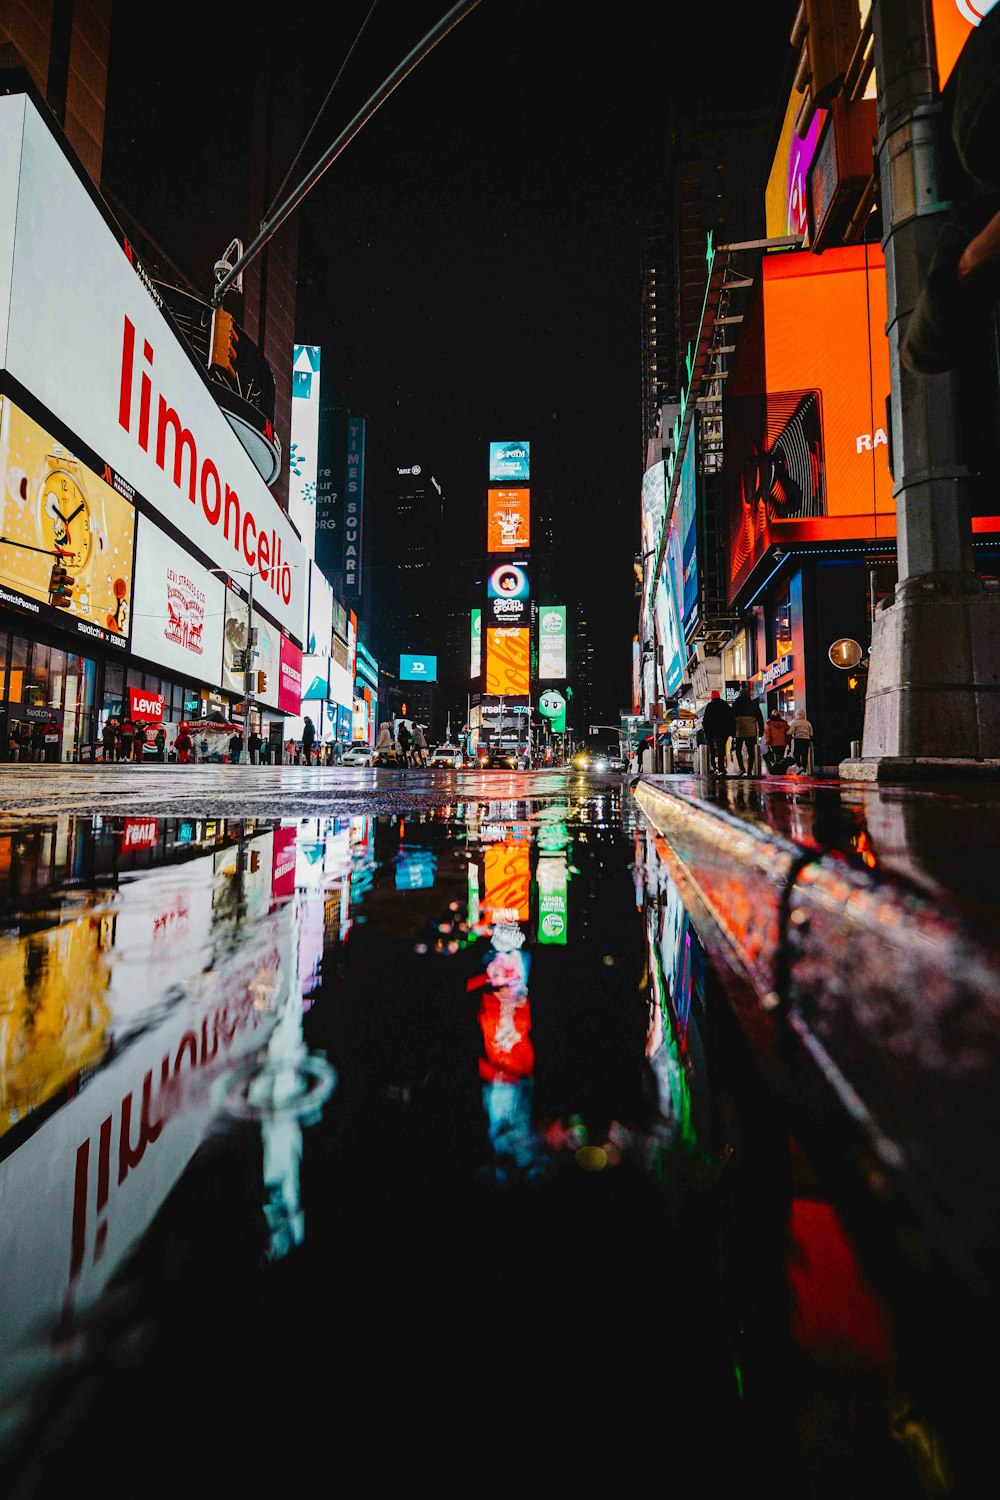 a person walking in a wet street